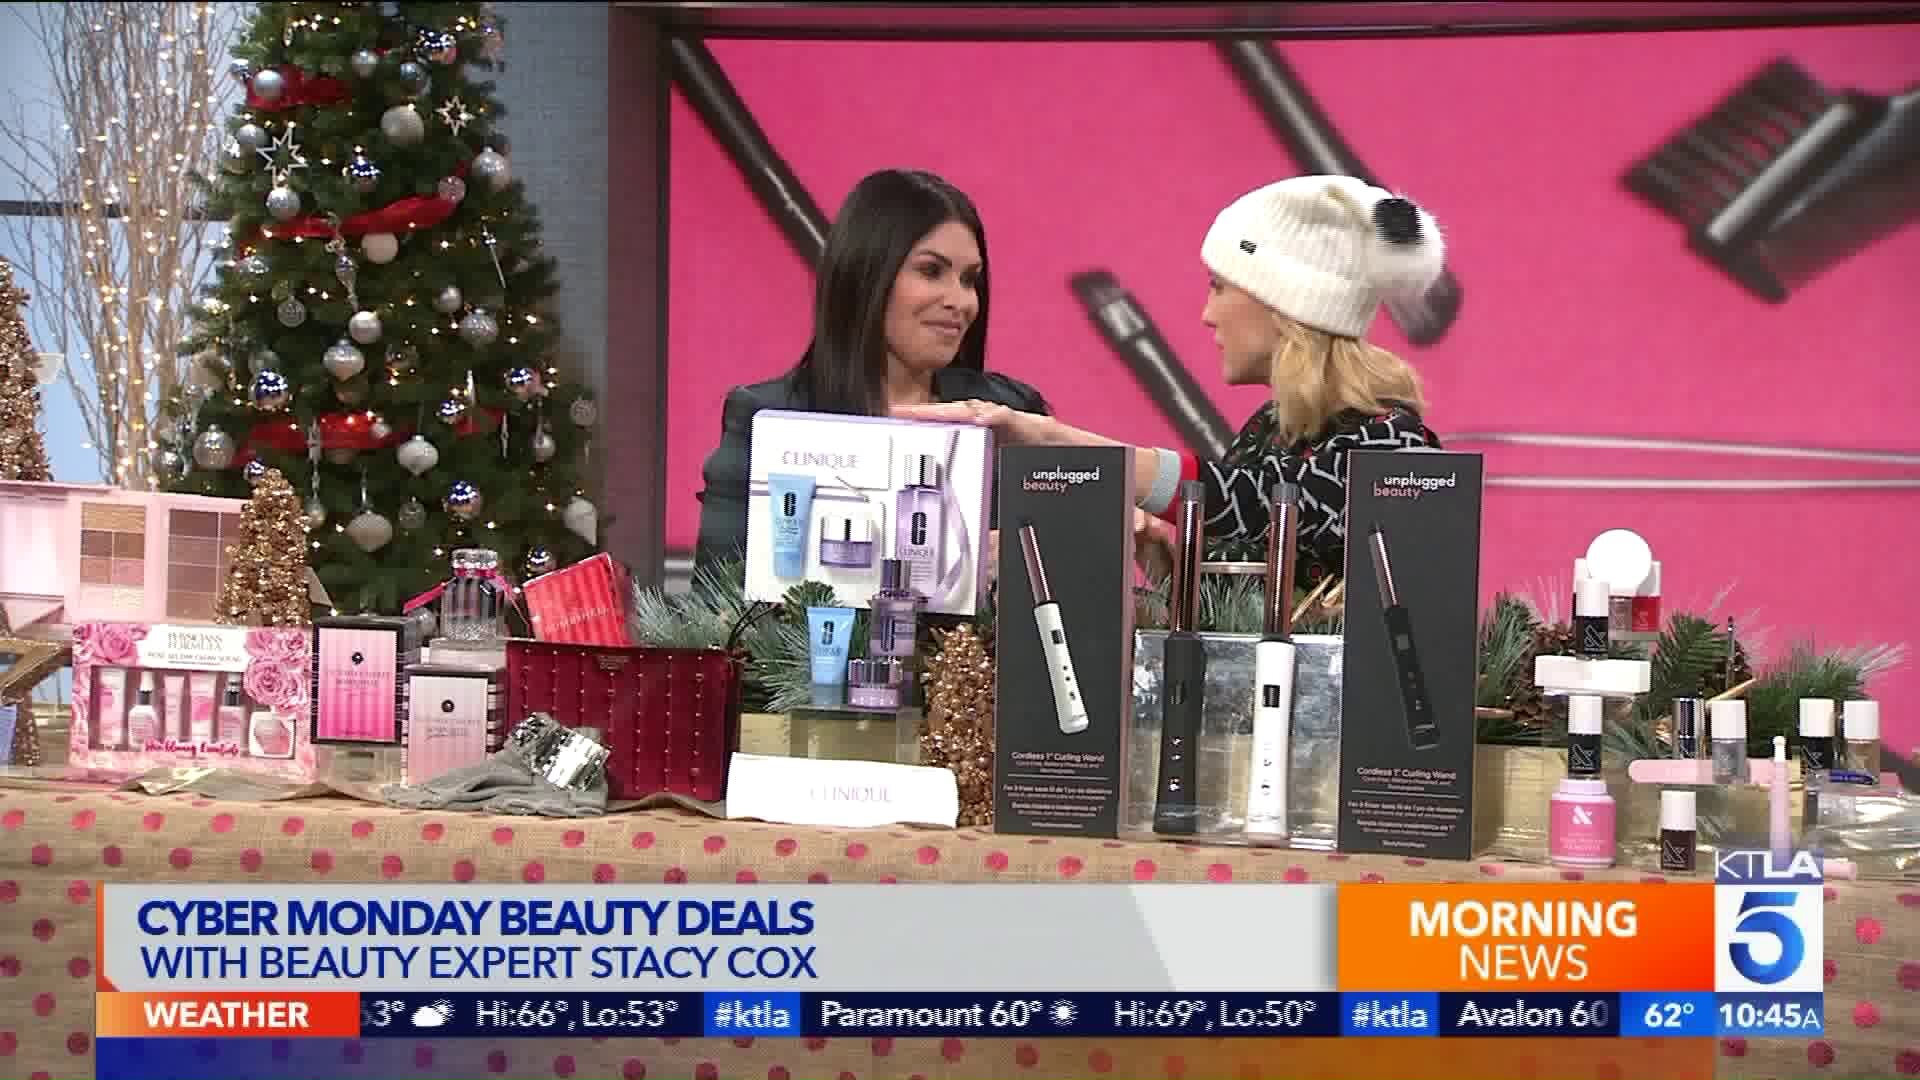 KTLA | Cyber Monday Beauty Deals With Beauty Expert Stacy Cox